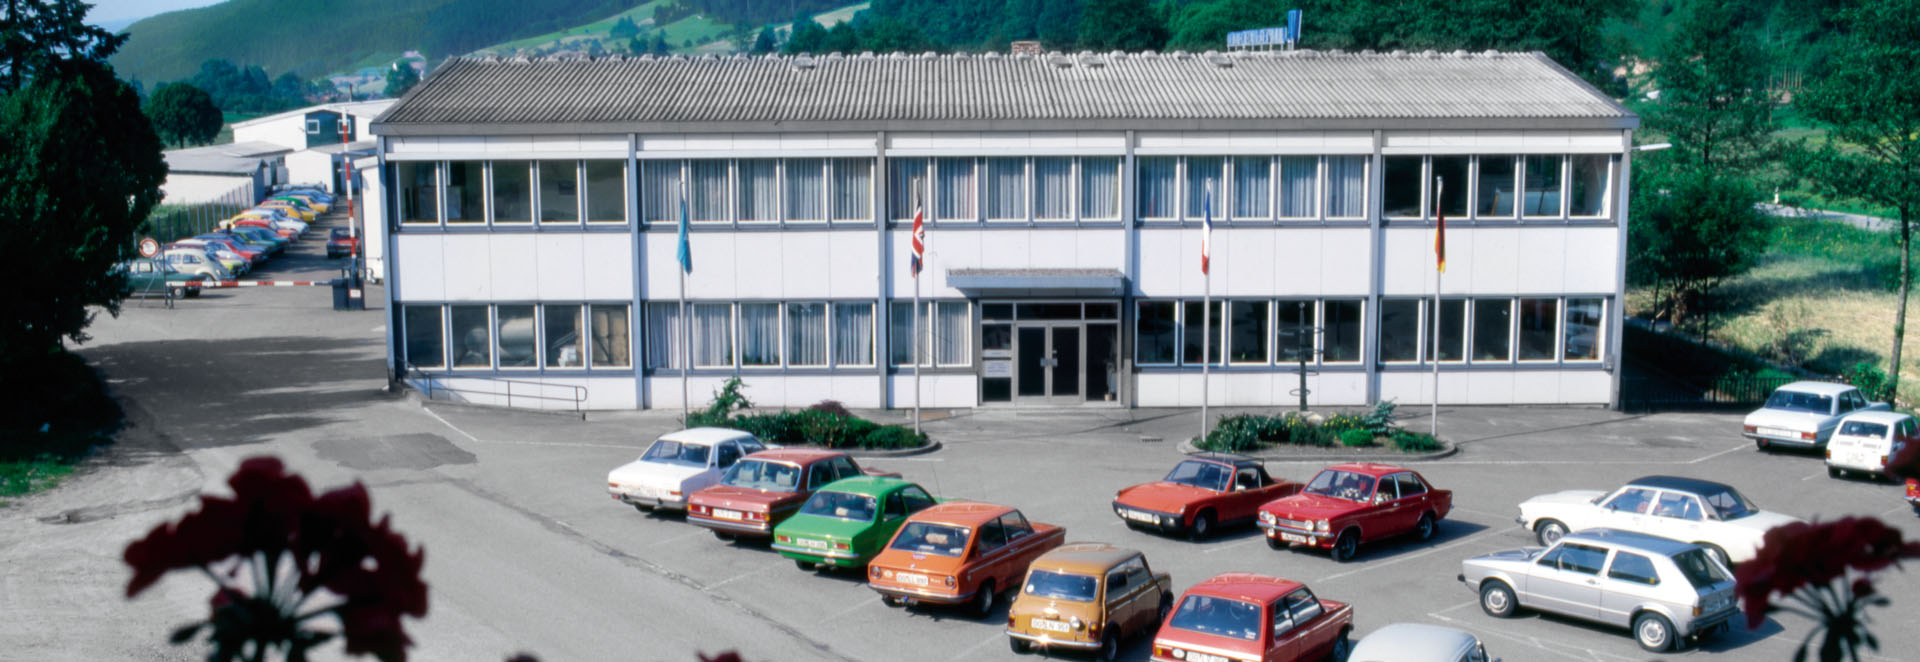 60 anos da Erwin Junker Maschinenfabrik GmbH